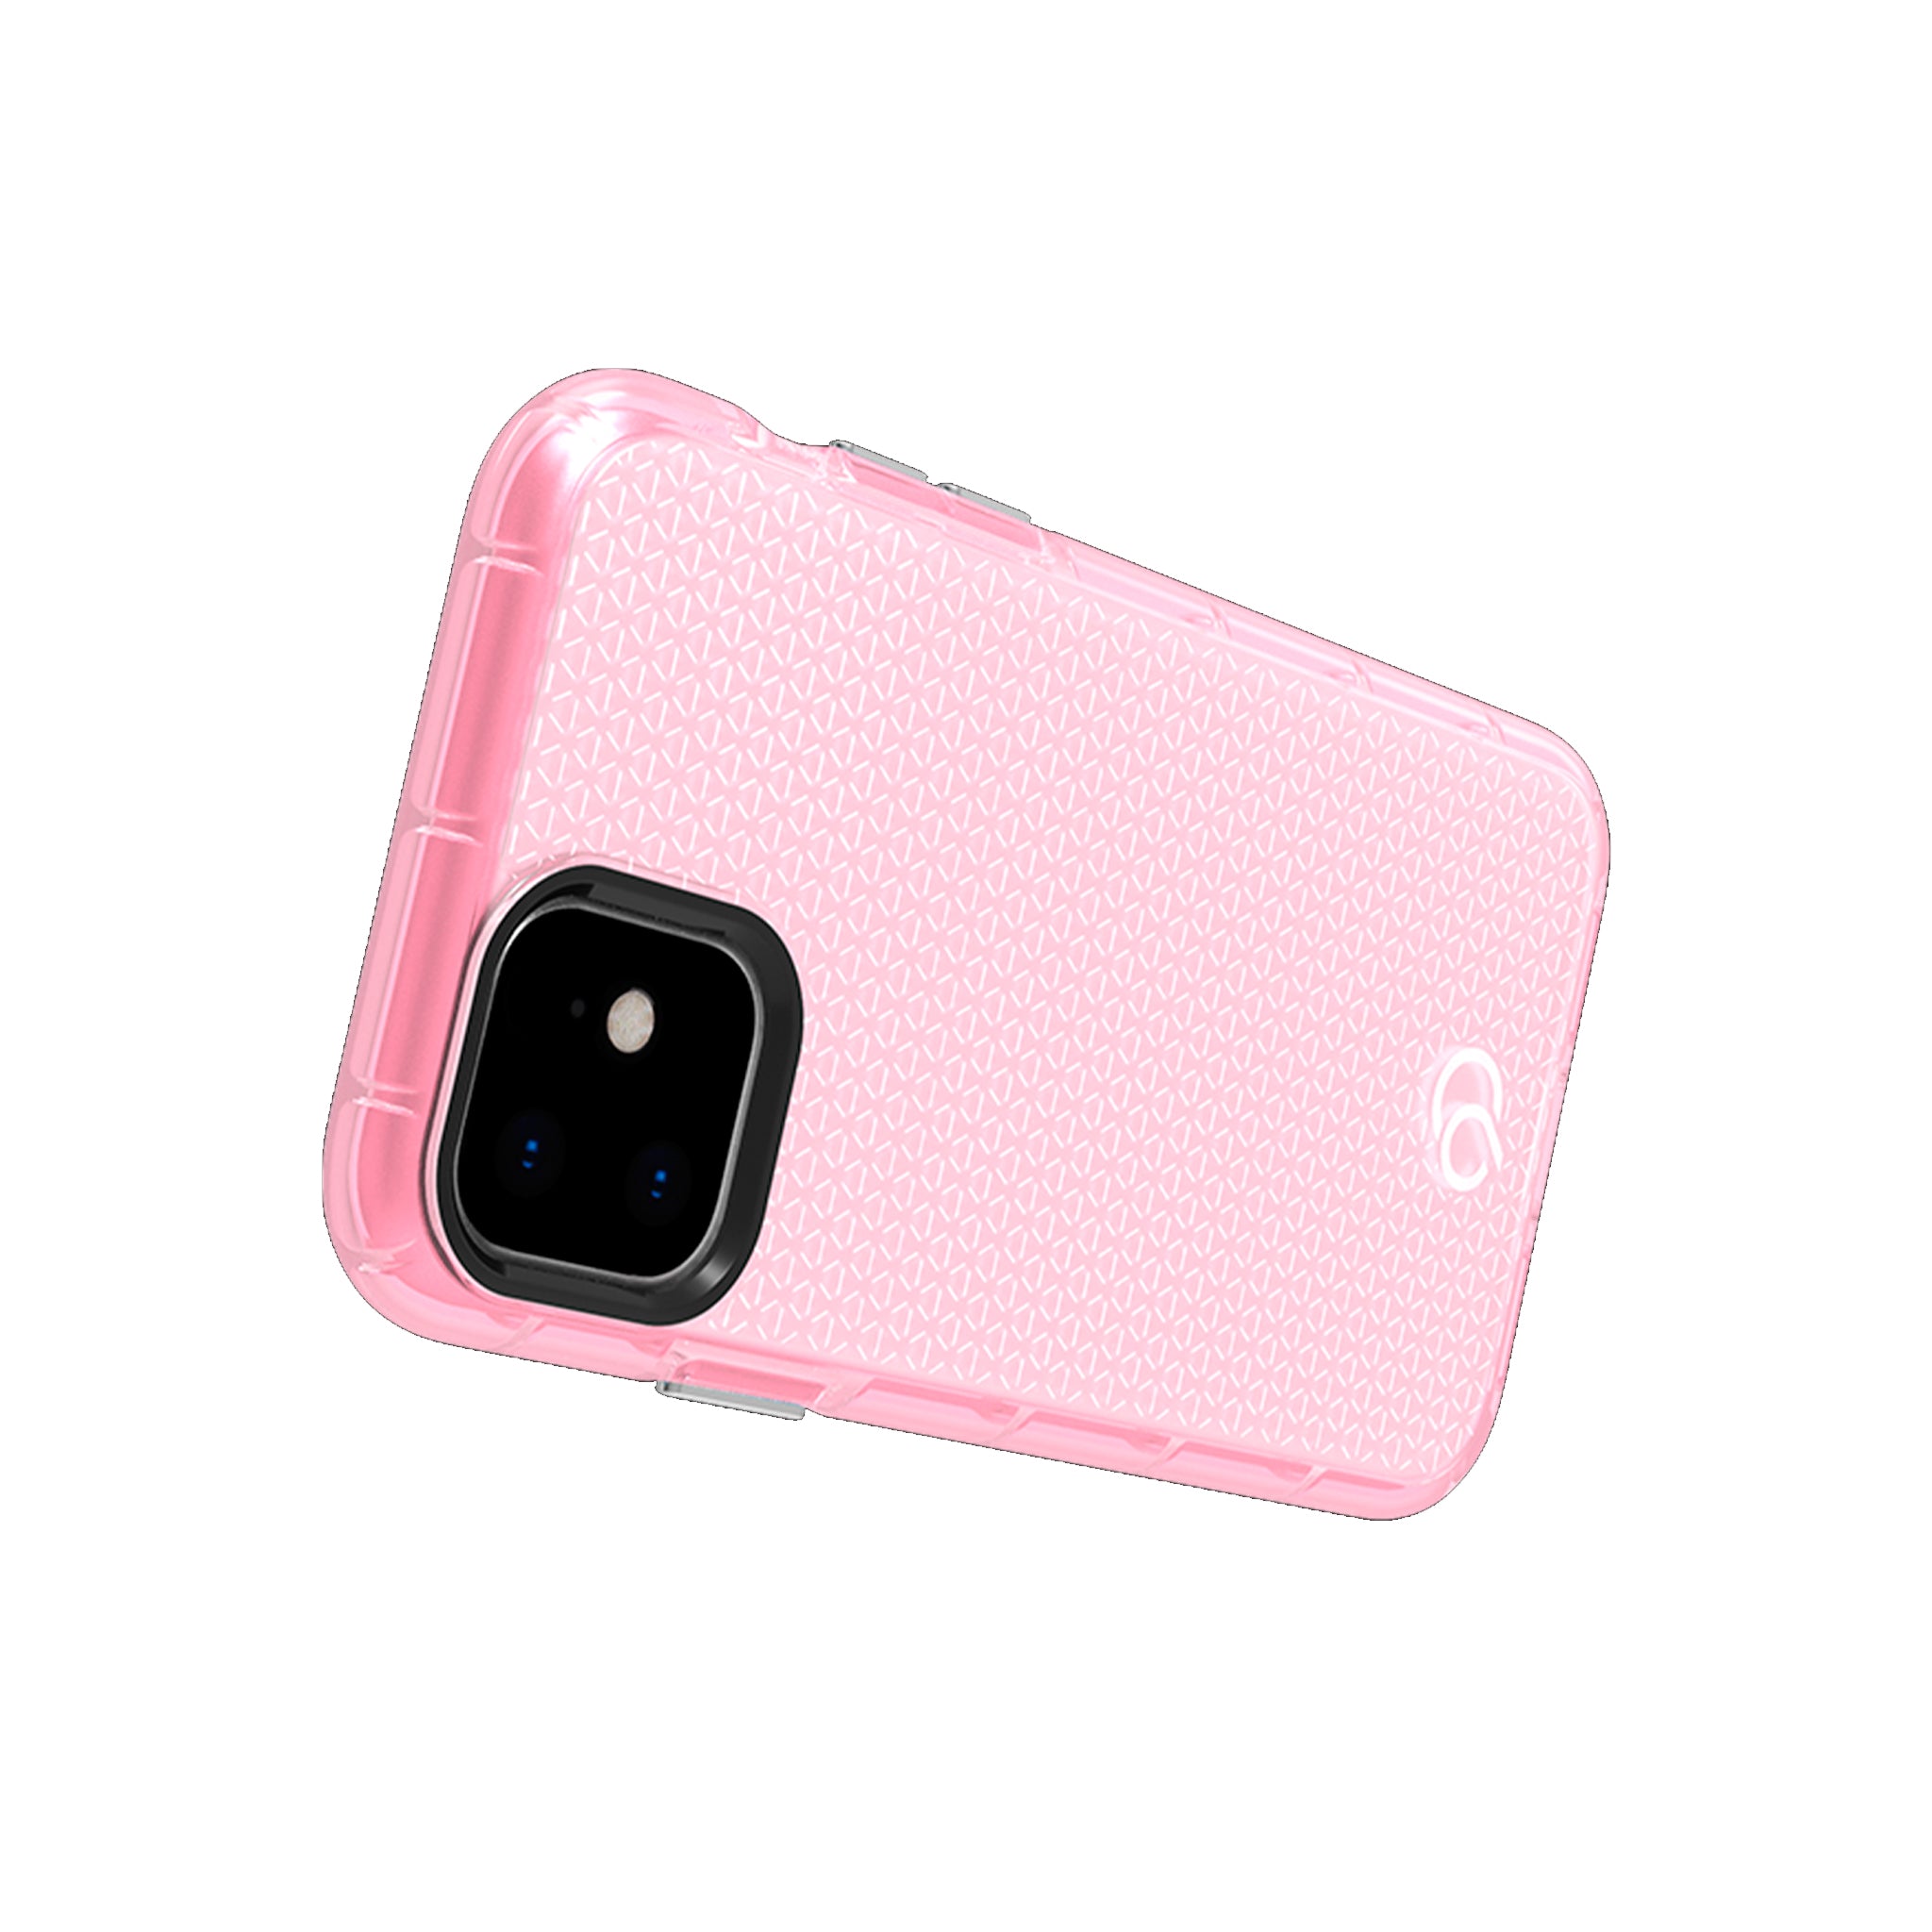 Nimbus9 - Phantom 2 Case For Apple Iphone 11 - Flamingo